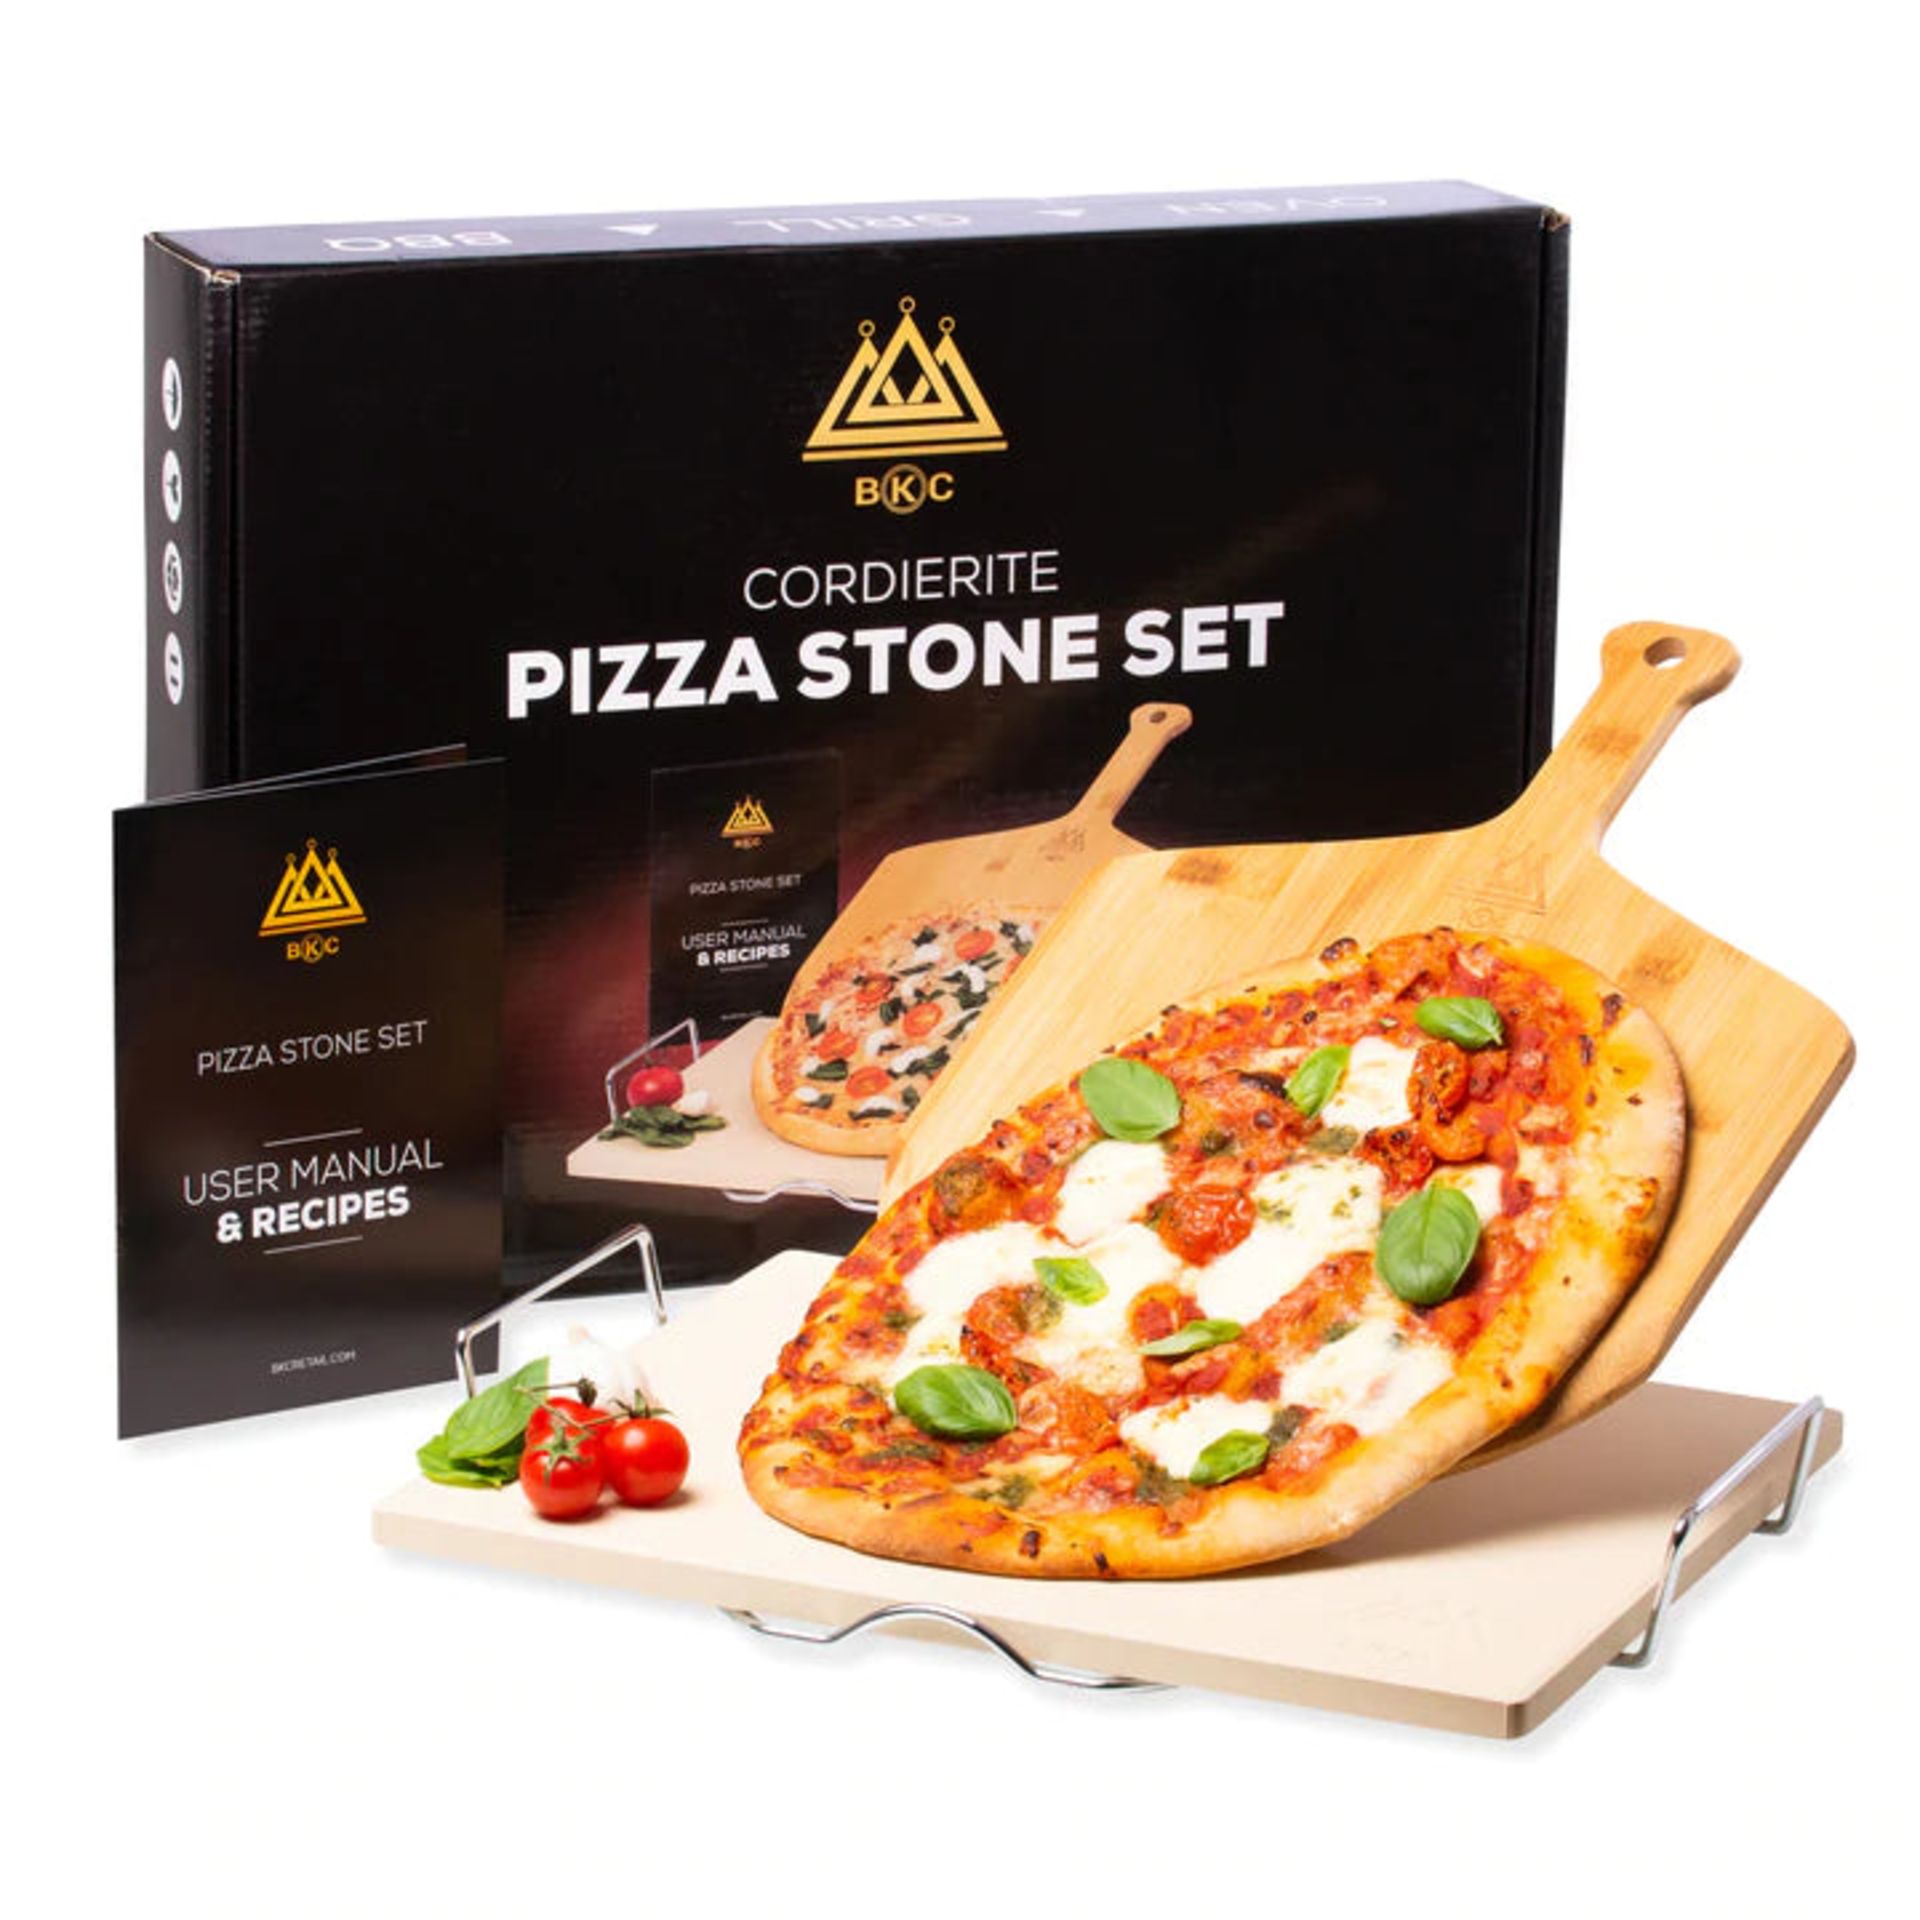 1 x BKC Cordierite Pizza Stone Set - Includes Pizza Stone, Paddle, Wire Rack and Recipe Manual - New